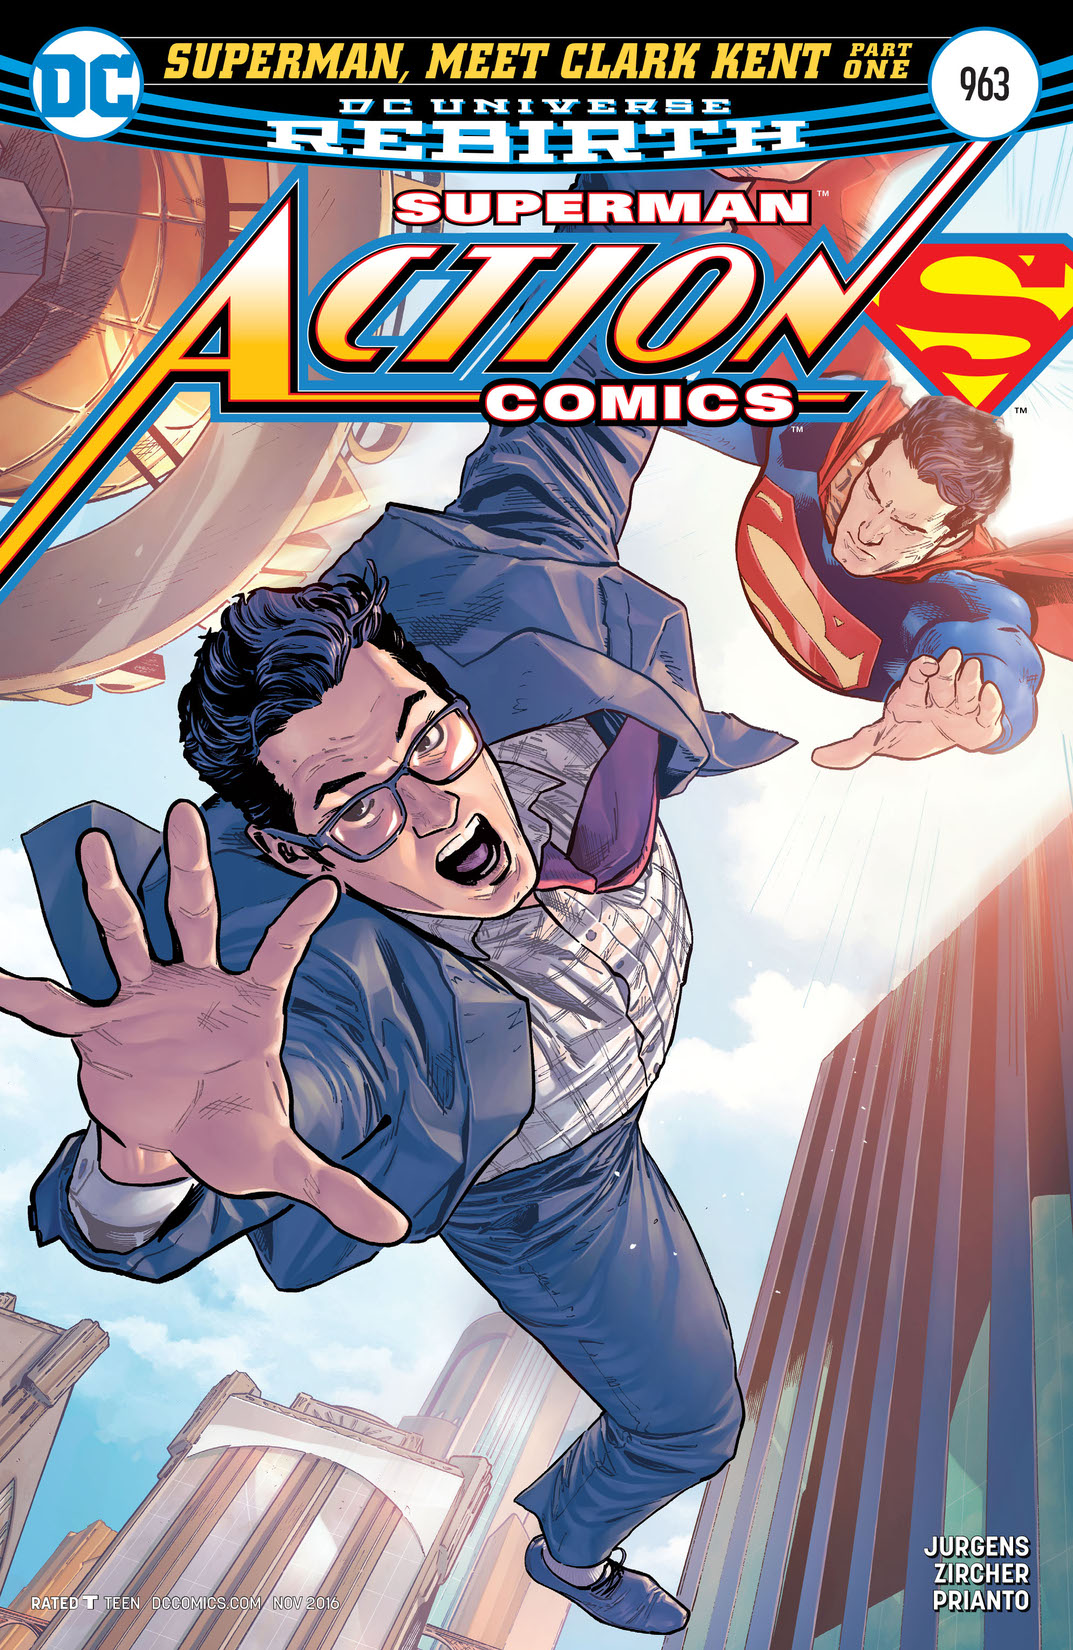 Action Comics (2016-) #963 preview images